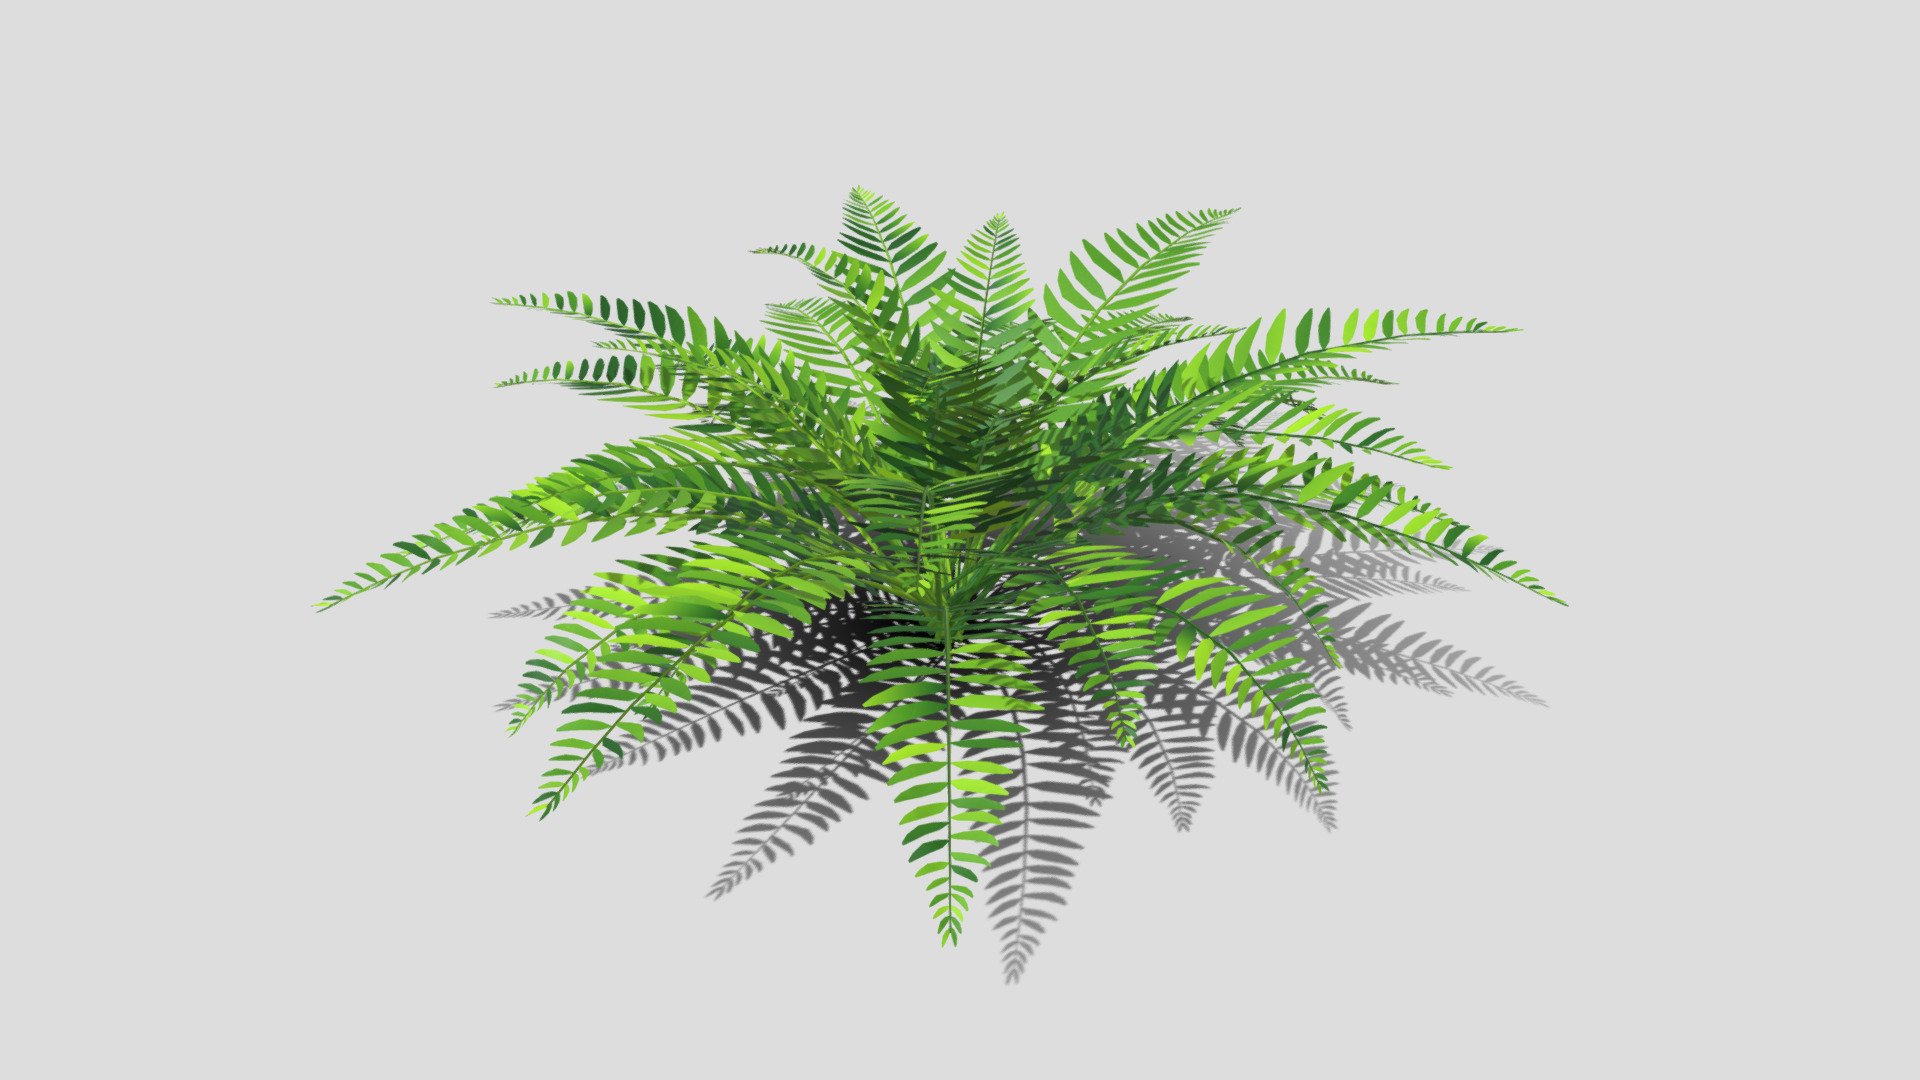 low poly 3d model of green bush - Green Bush - Buy Royalty Free 3D model by assetfactory 3d model